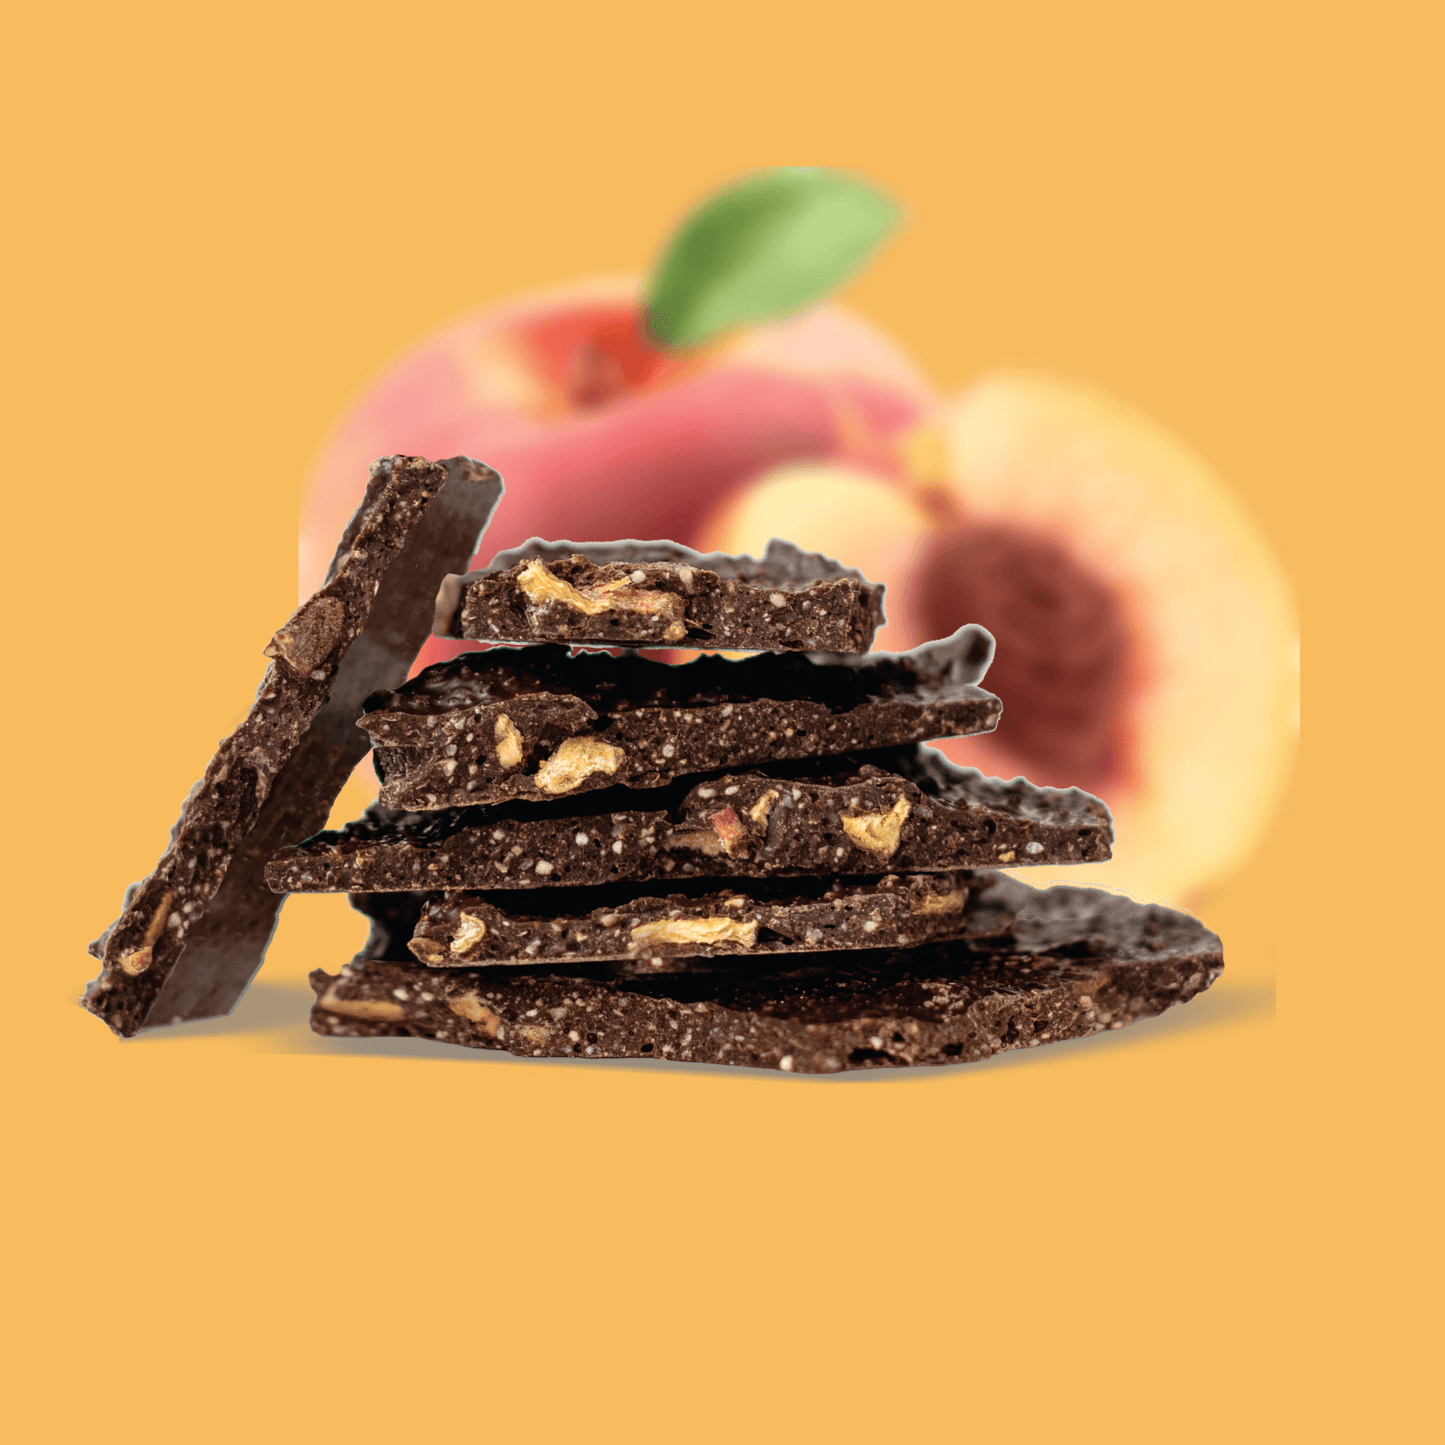 Bean Bark Peach - Remix Snacks